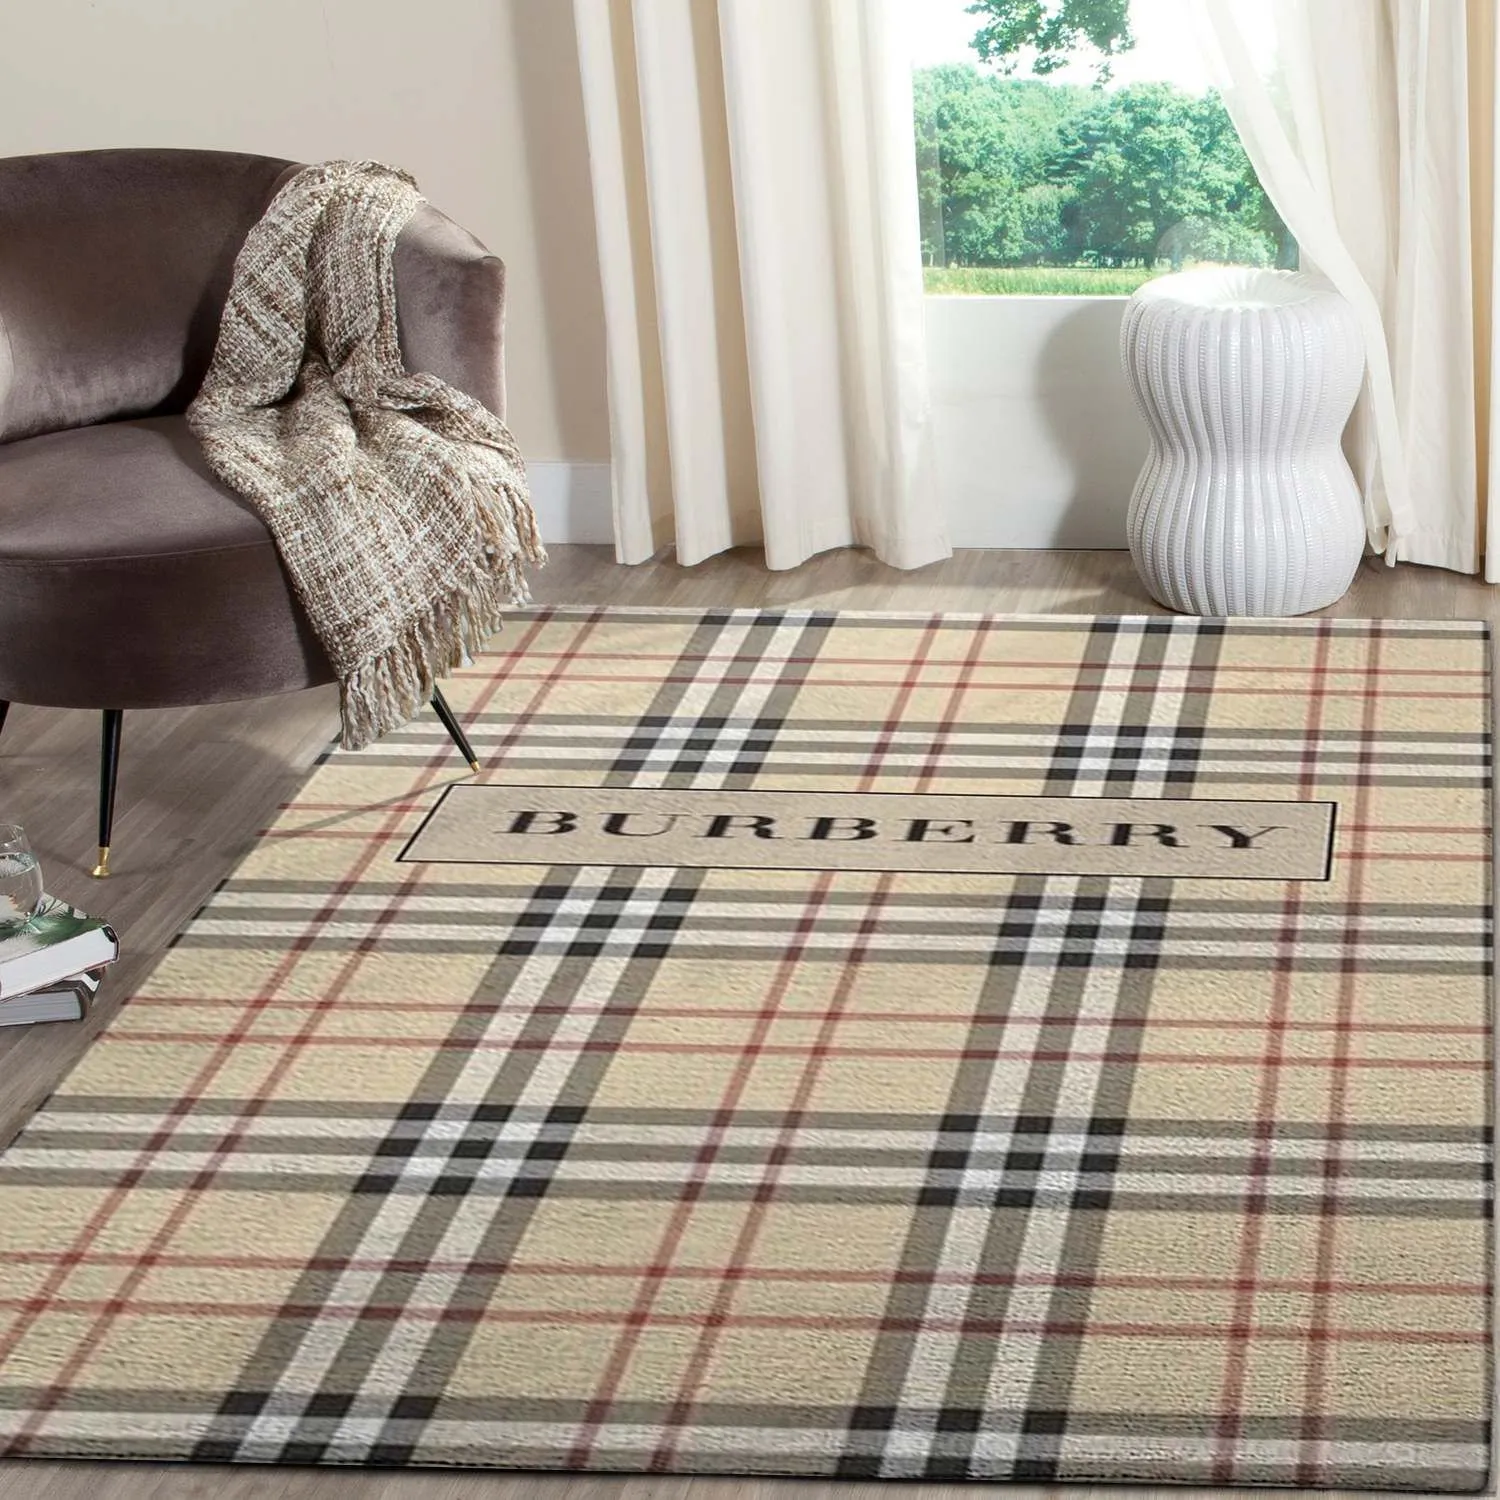 Burberry Rectangle Rug Home Decor Door Mat Luxury Fashion Brand Area Carpet